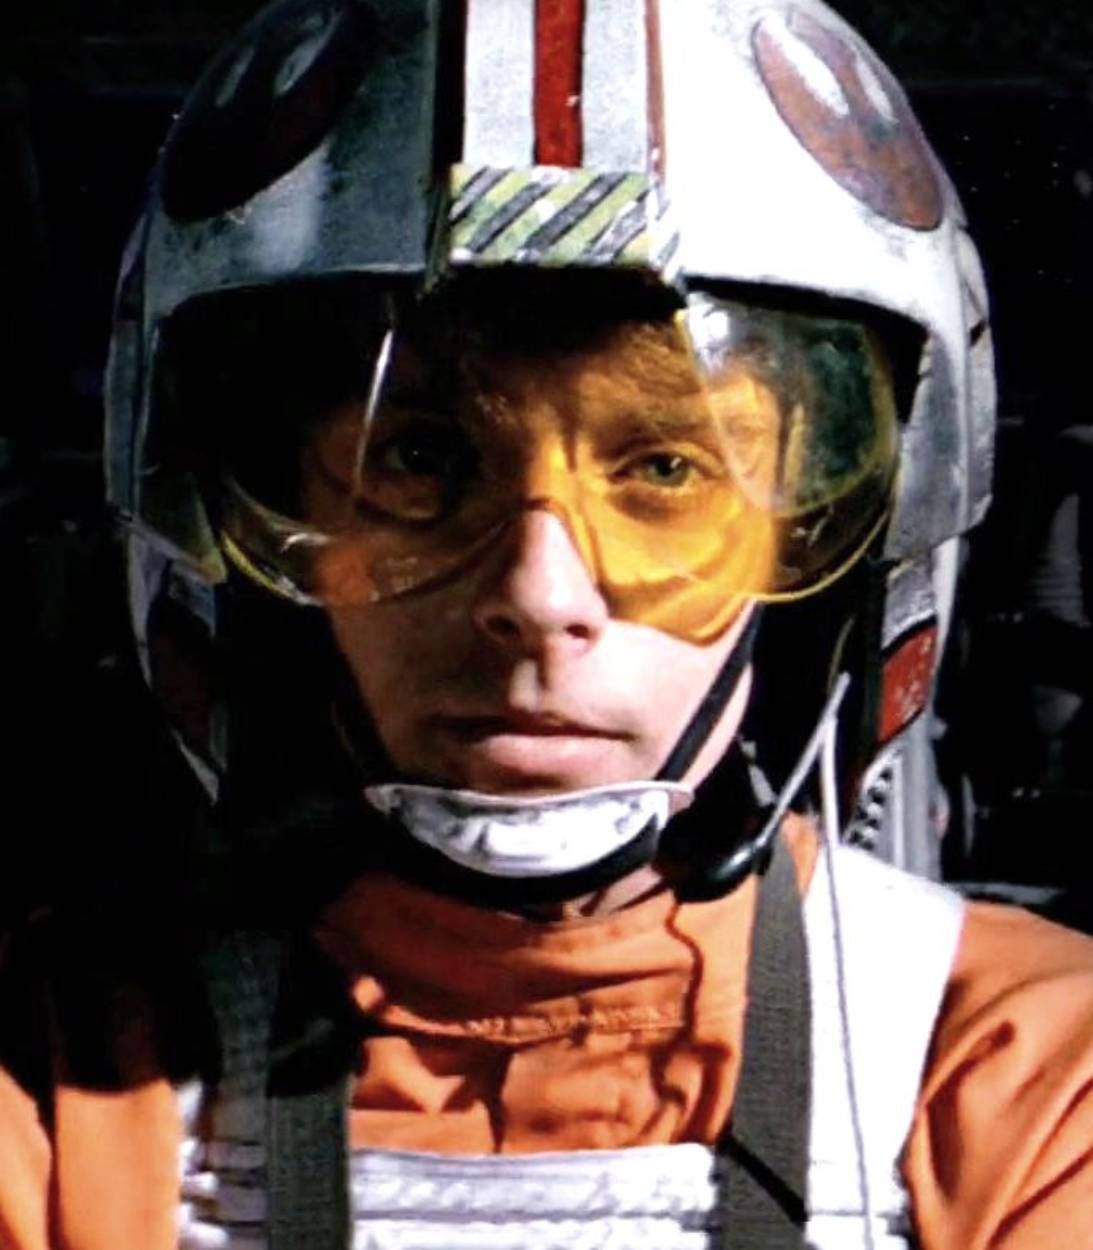 Luke Skywalker in Star Wars A New Hope pic vertical